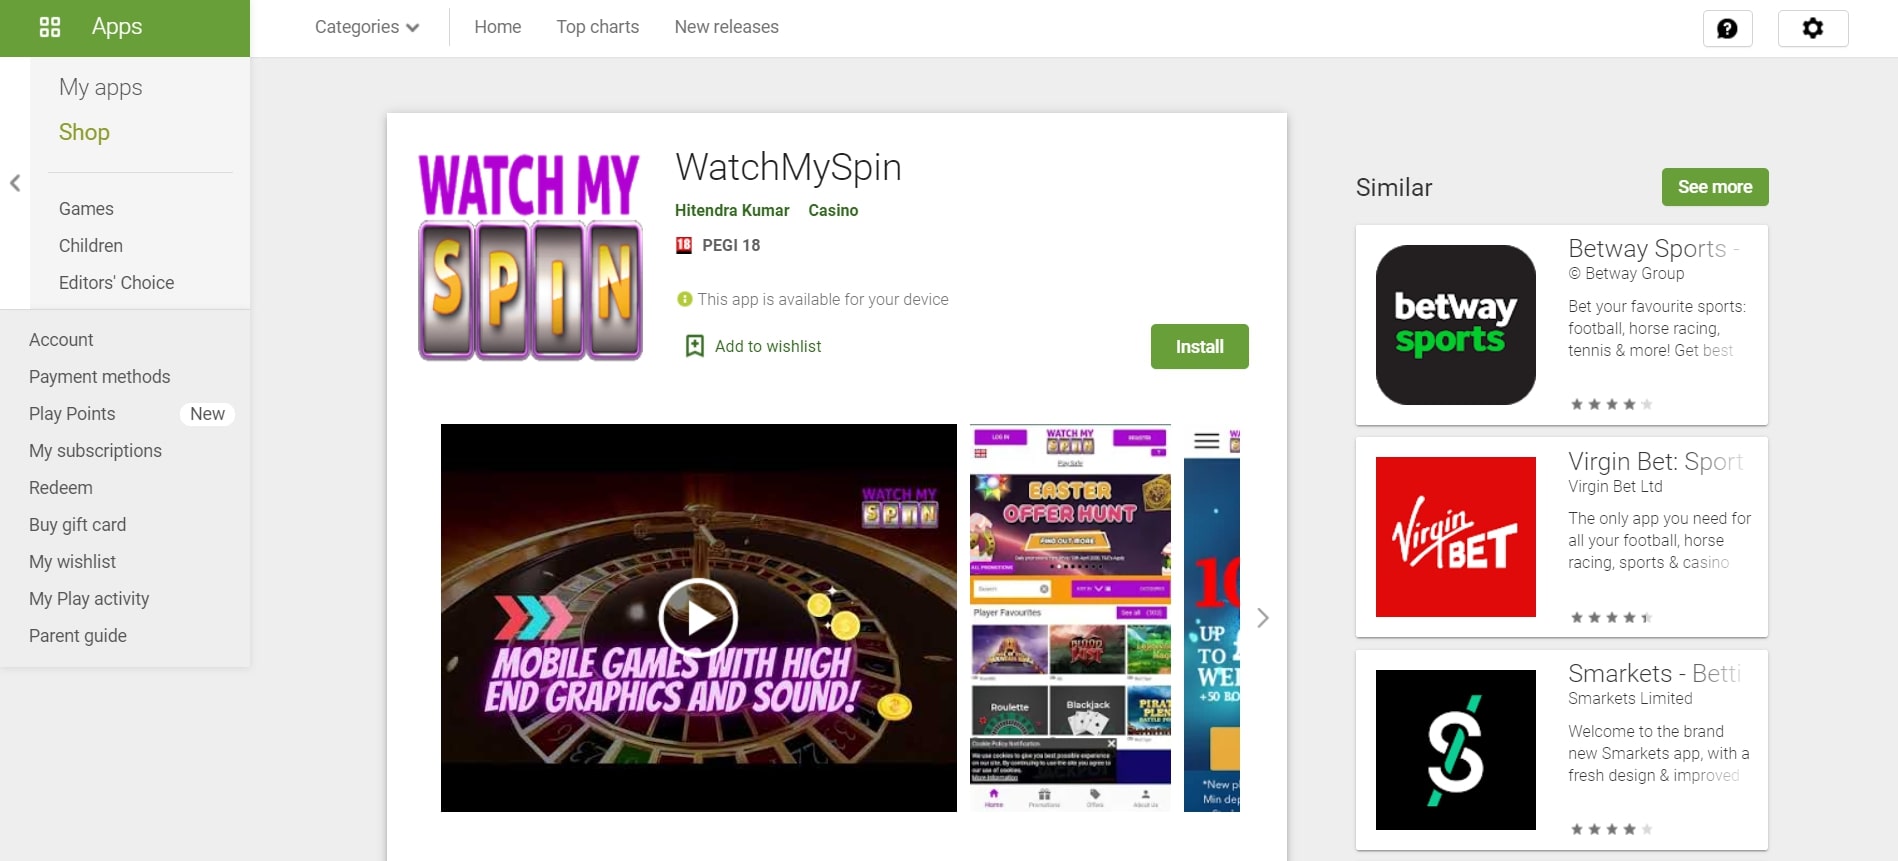 WatchMySpin Casino App